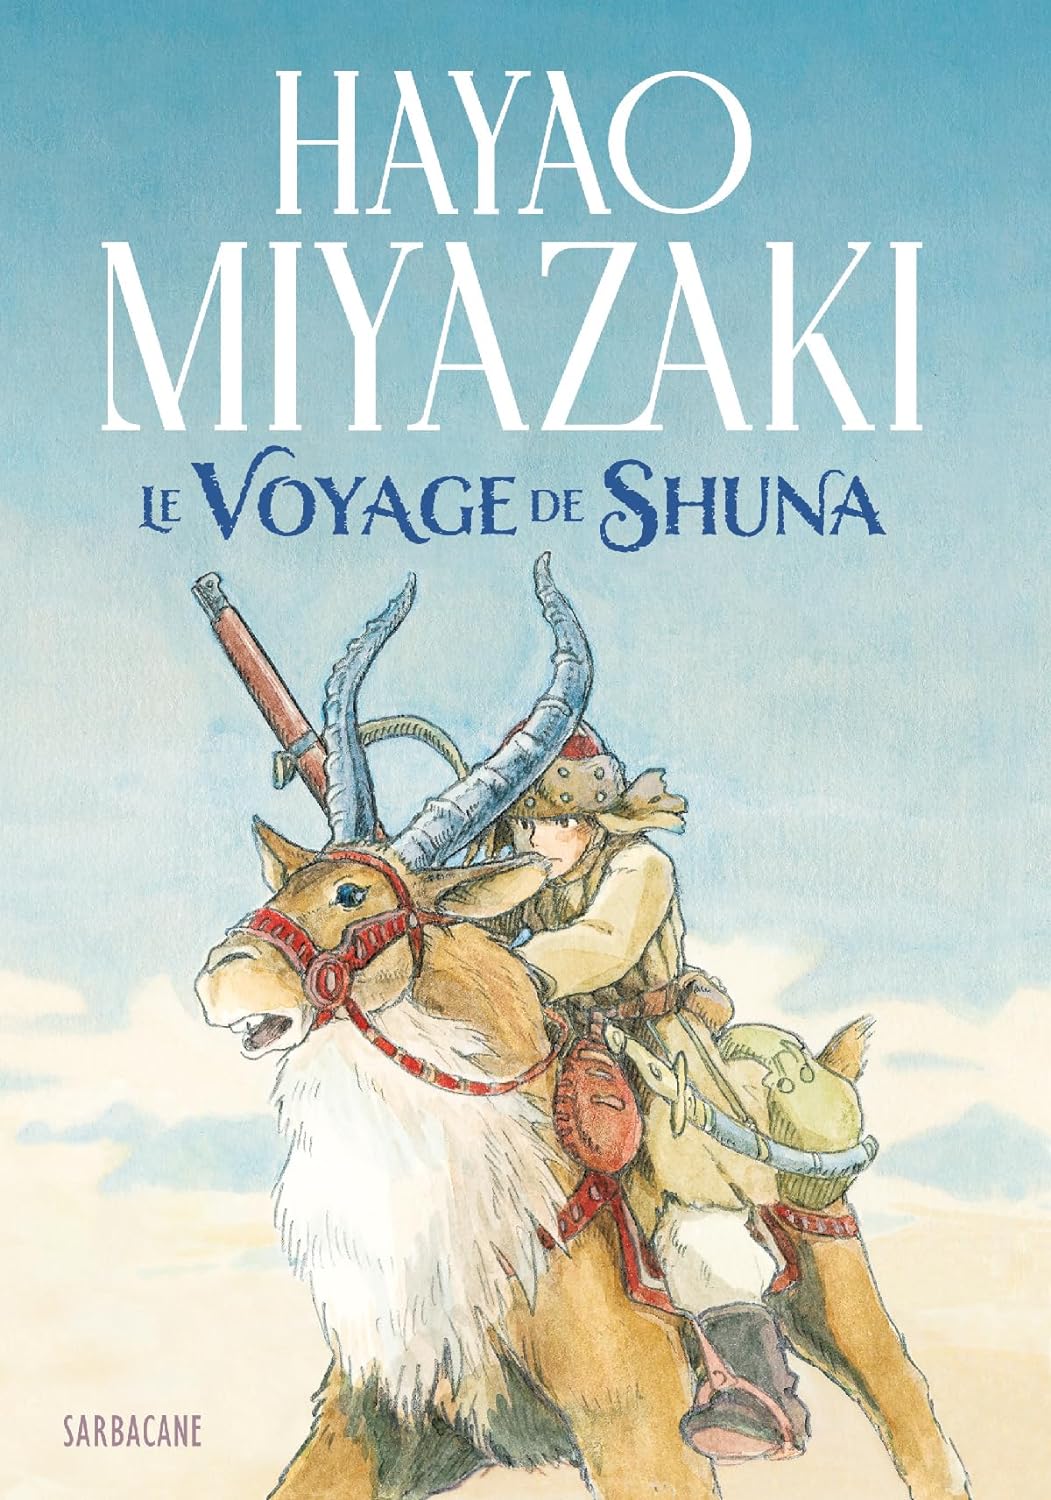 Tapis de souris San princesse mononoke hayao h. Miyazaki manga